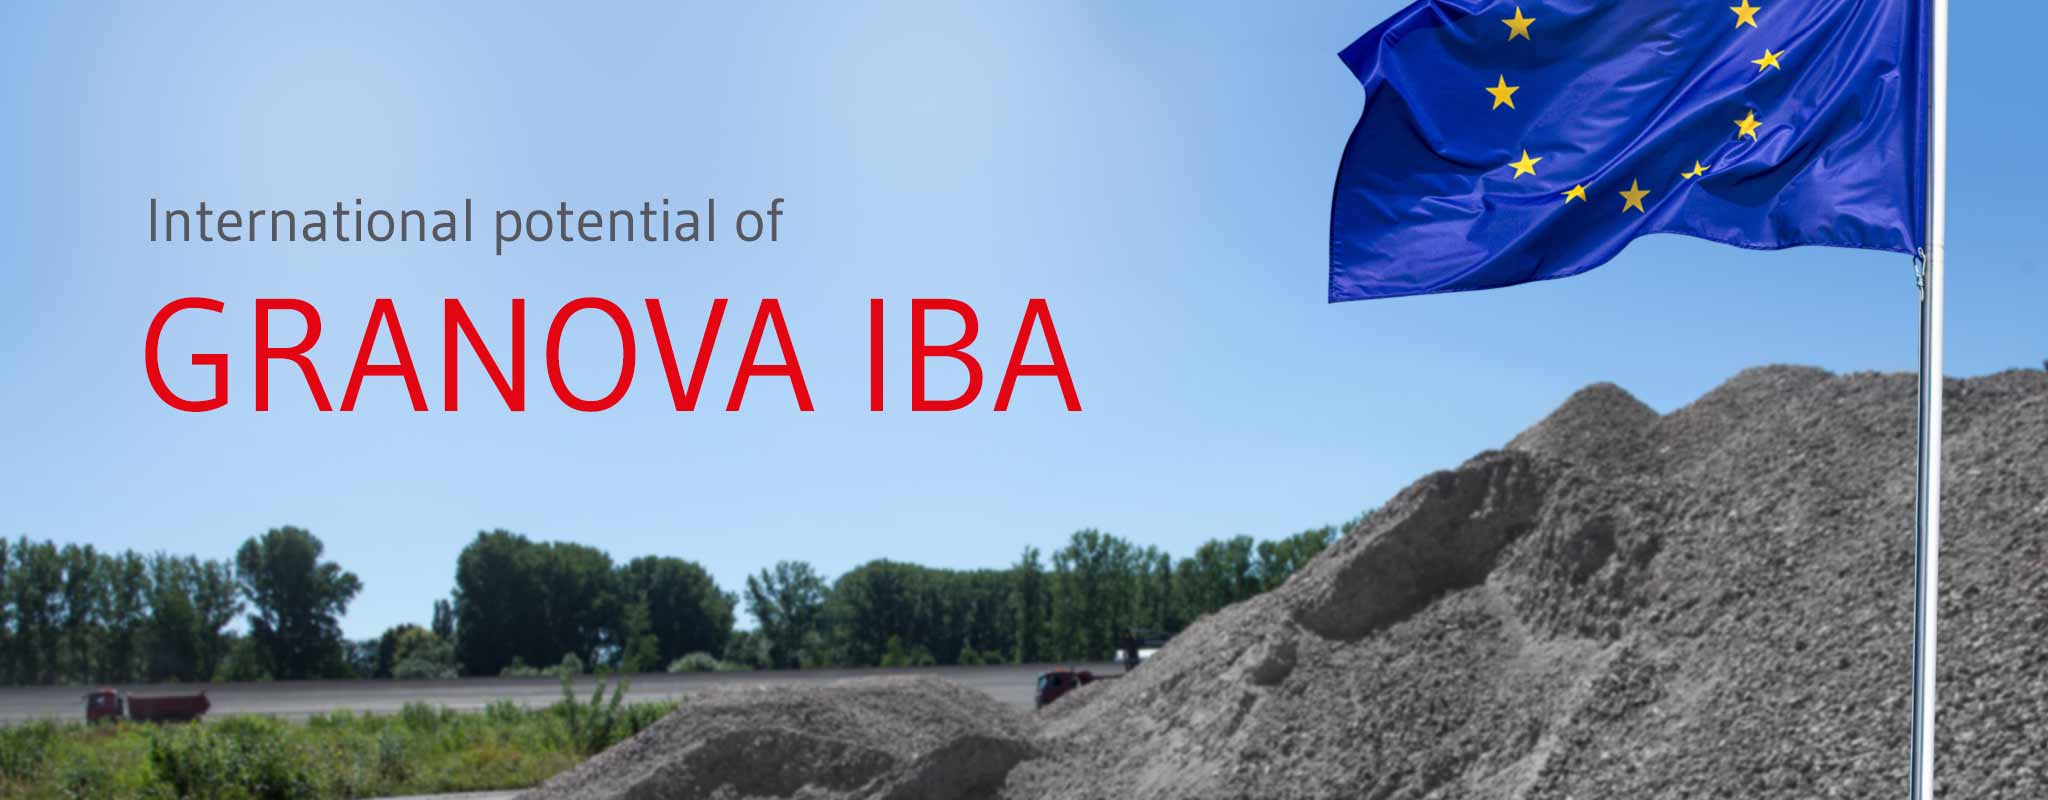 International potential of incinerator bottom ash